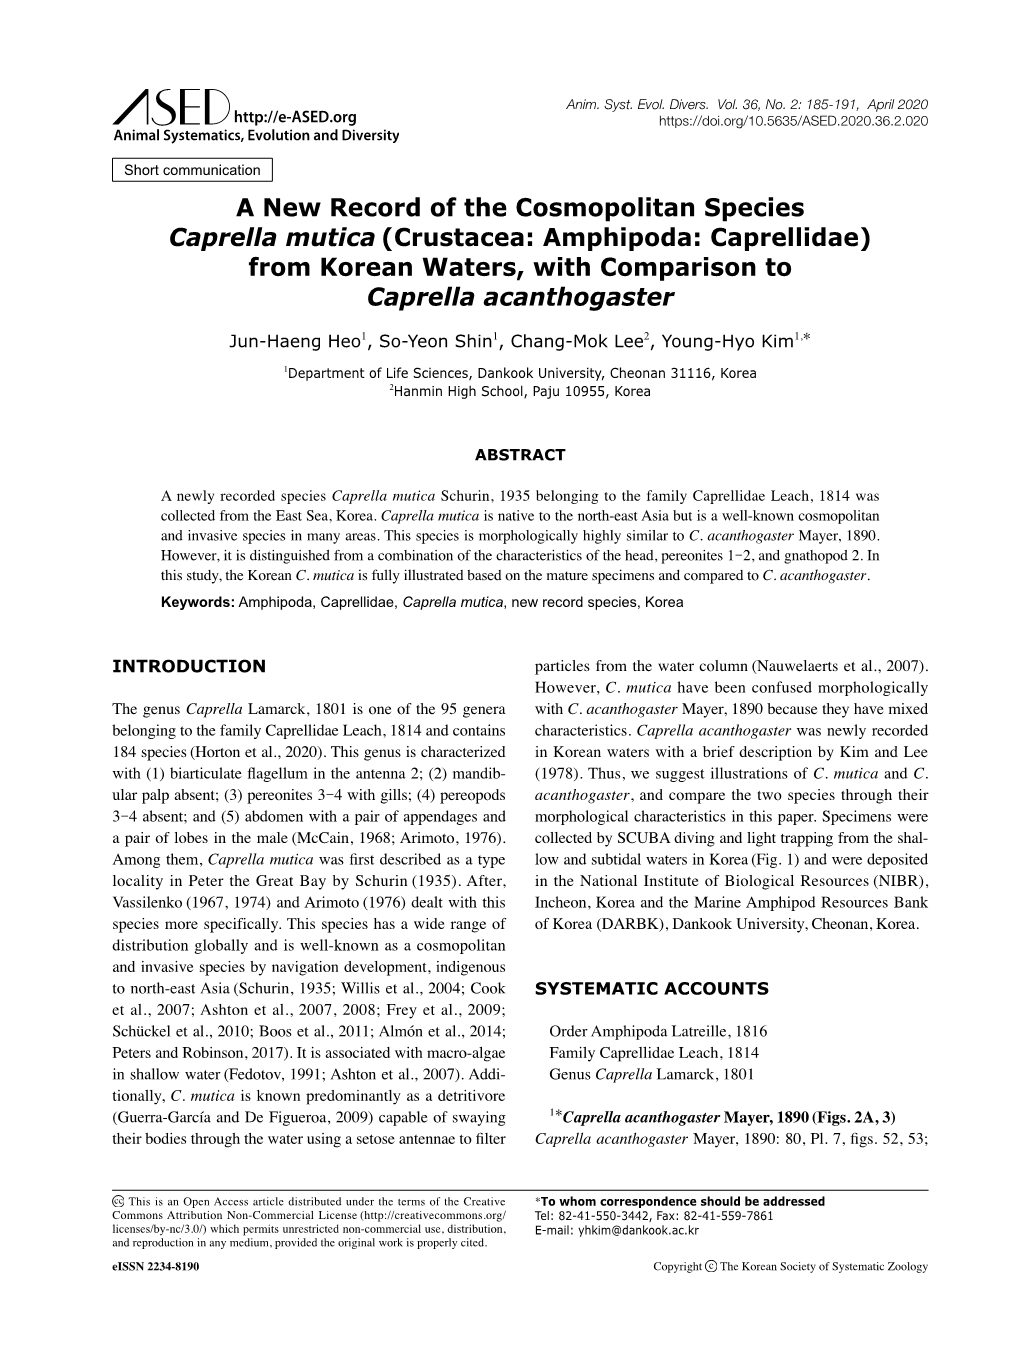 A New Record of the Cosmopolitan Species Caprella Mutica (Crustacea: Amphipoda: Caprellidae) from Korean Waters, with Comparison to Caprella Acanthogaster